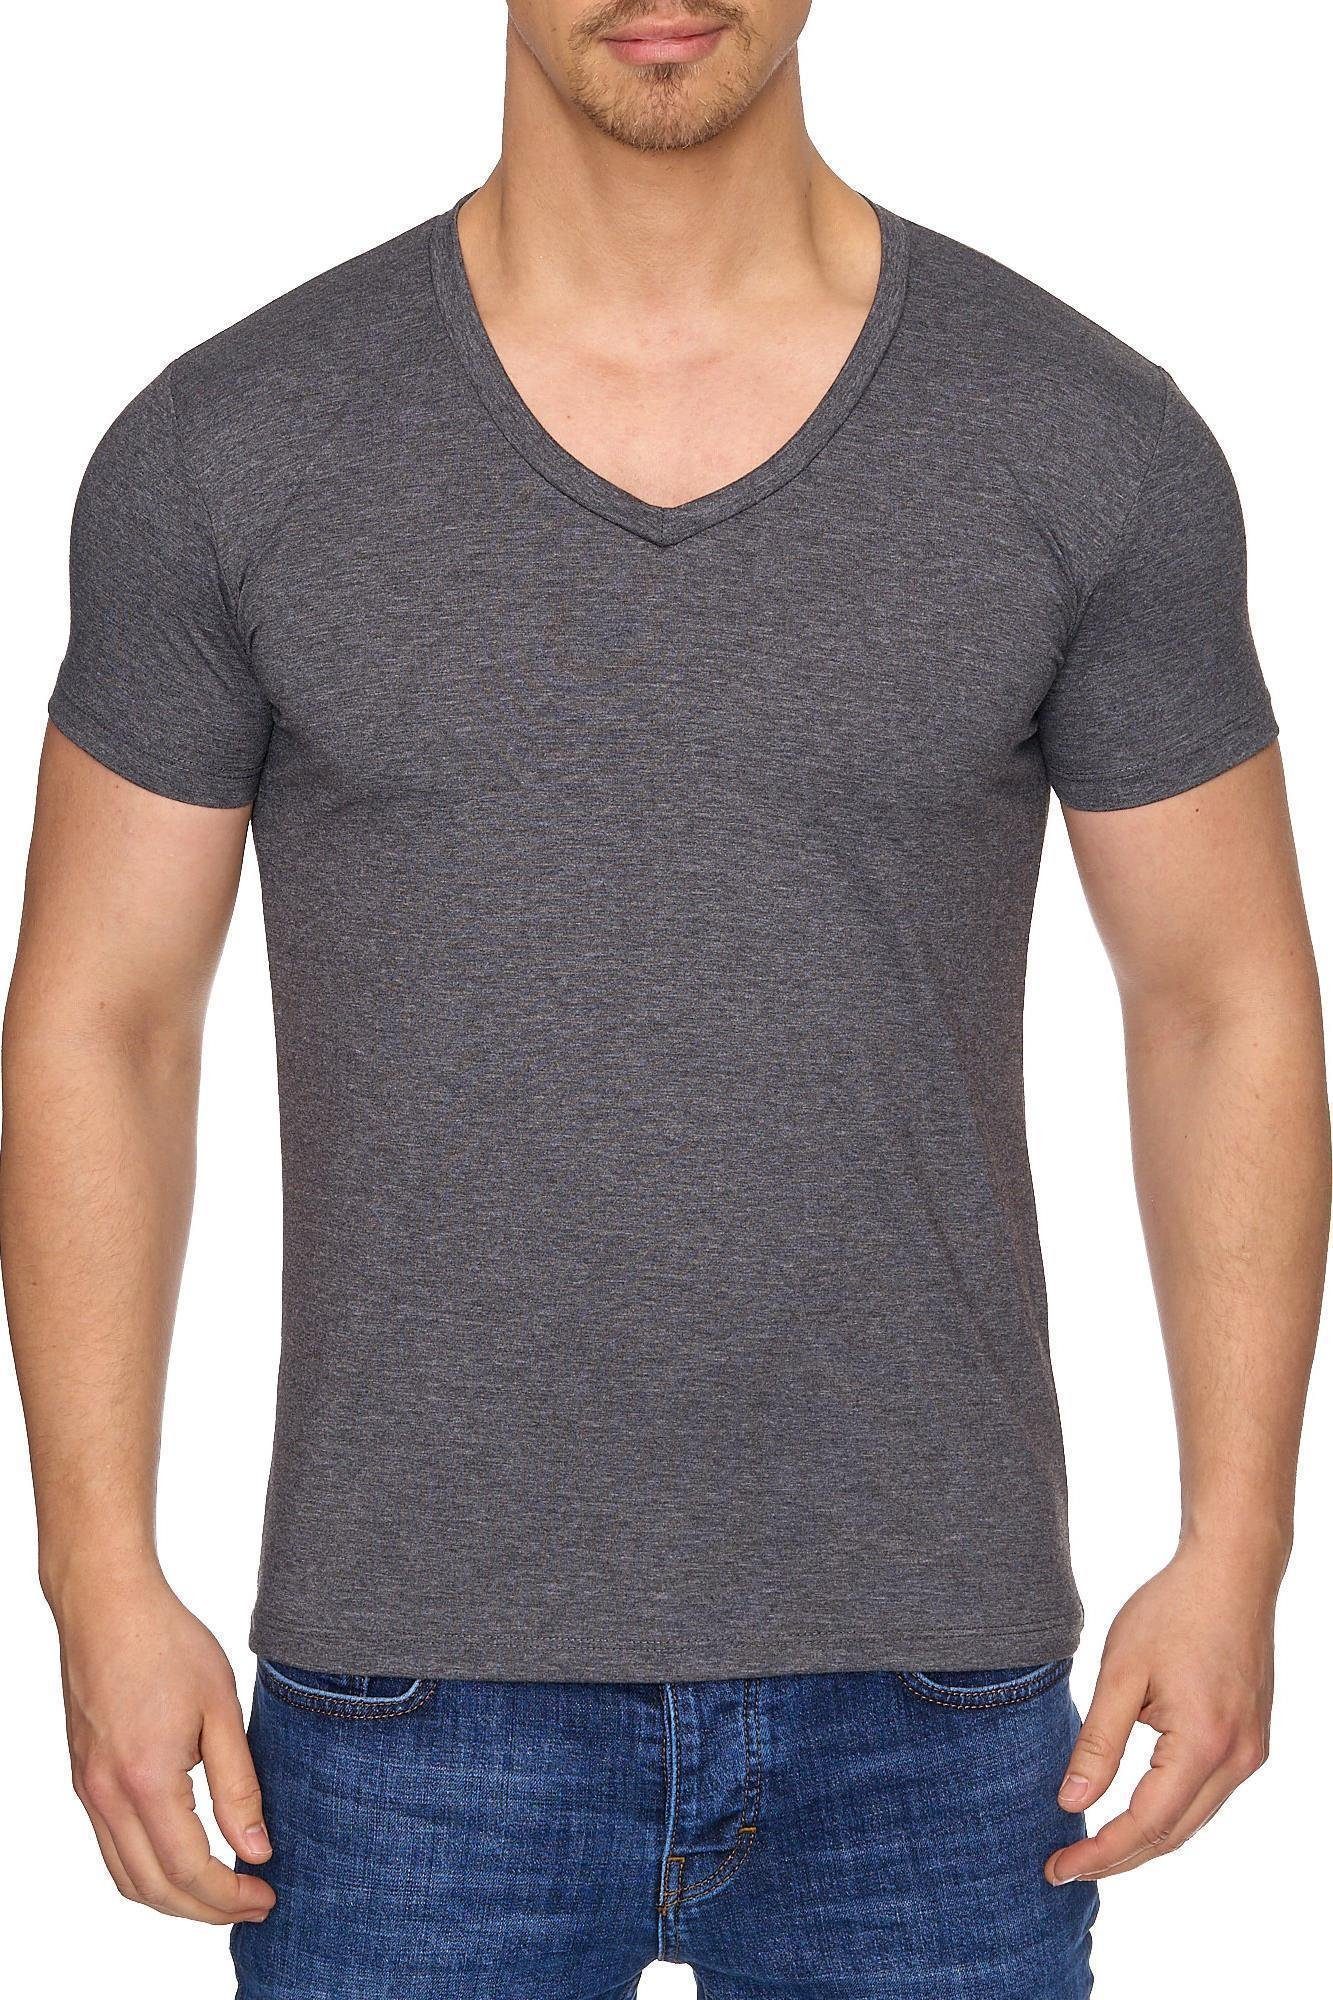 Tazzio V-Shirt 17100 zeitloses Basic T-Shirt anthrazit